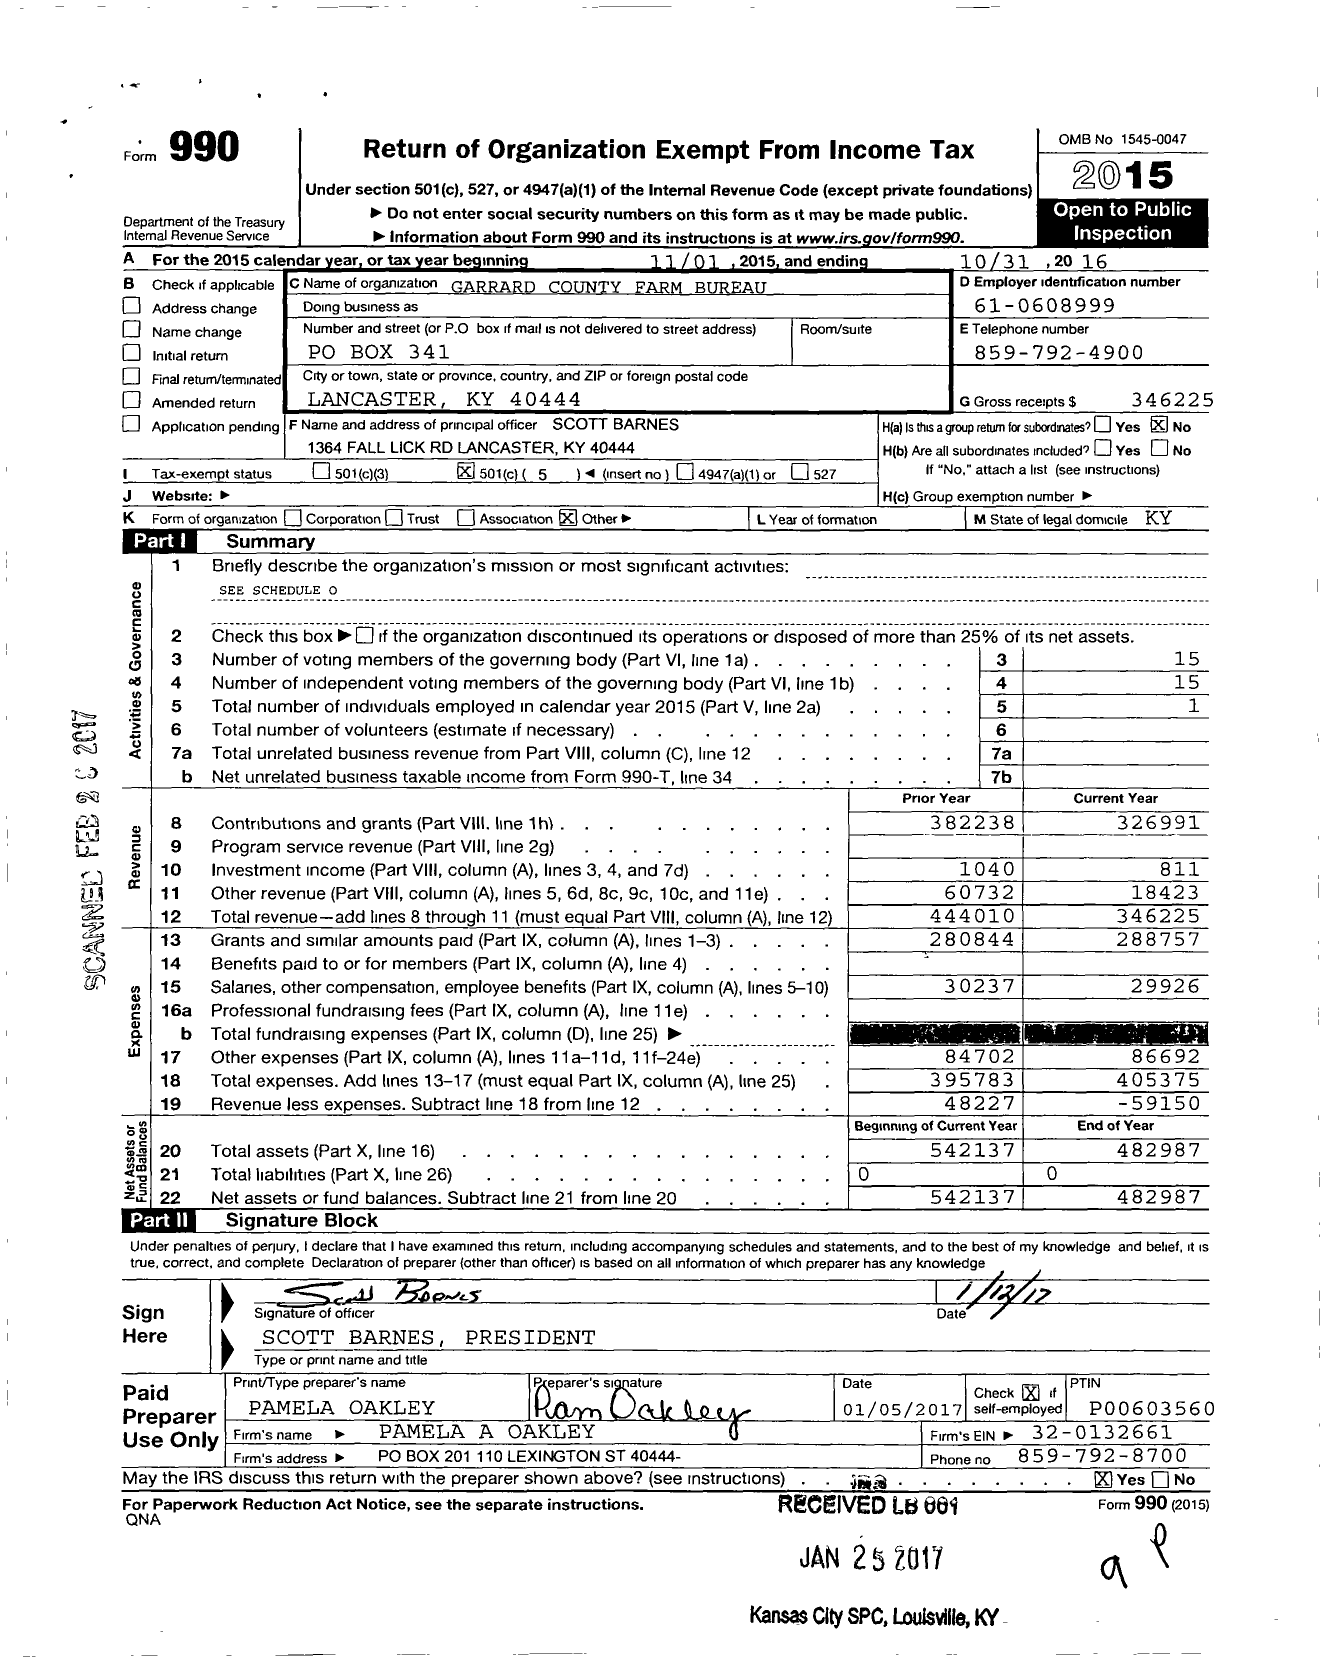 Image of first page of 2015 Form 990O for Kentucky Farm Bureau Federation - Garrard County Farm Bureau